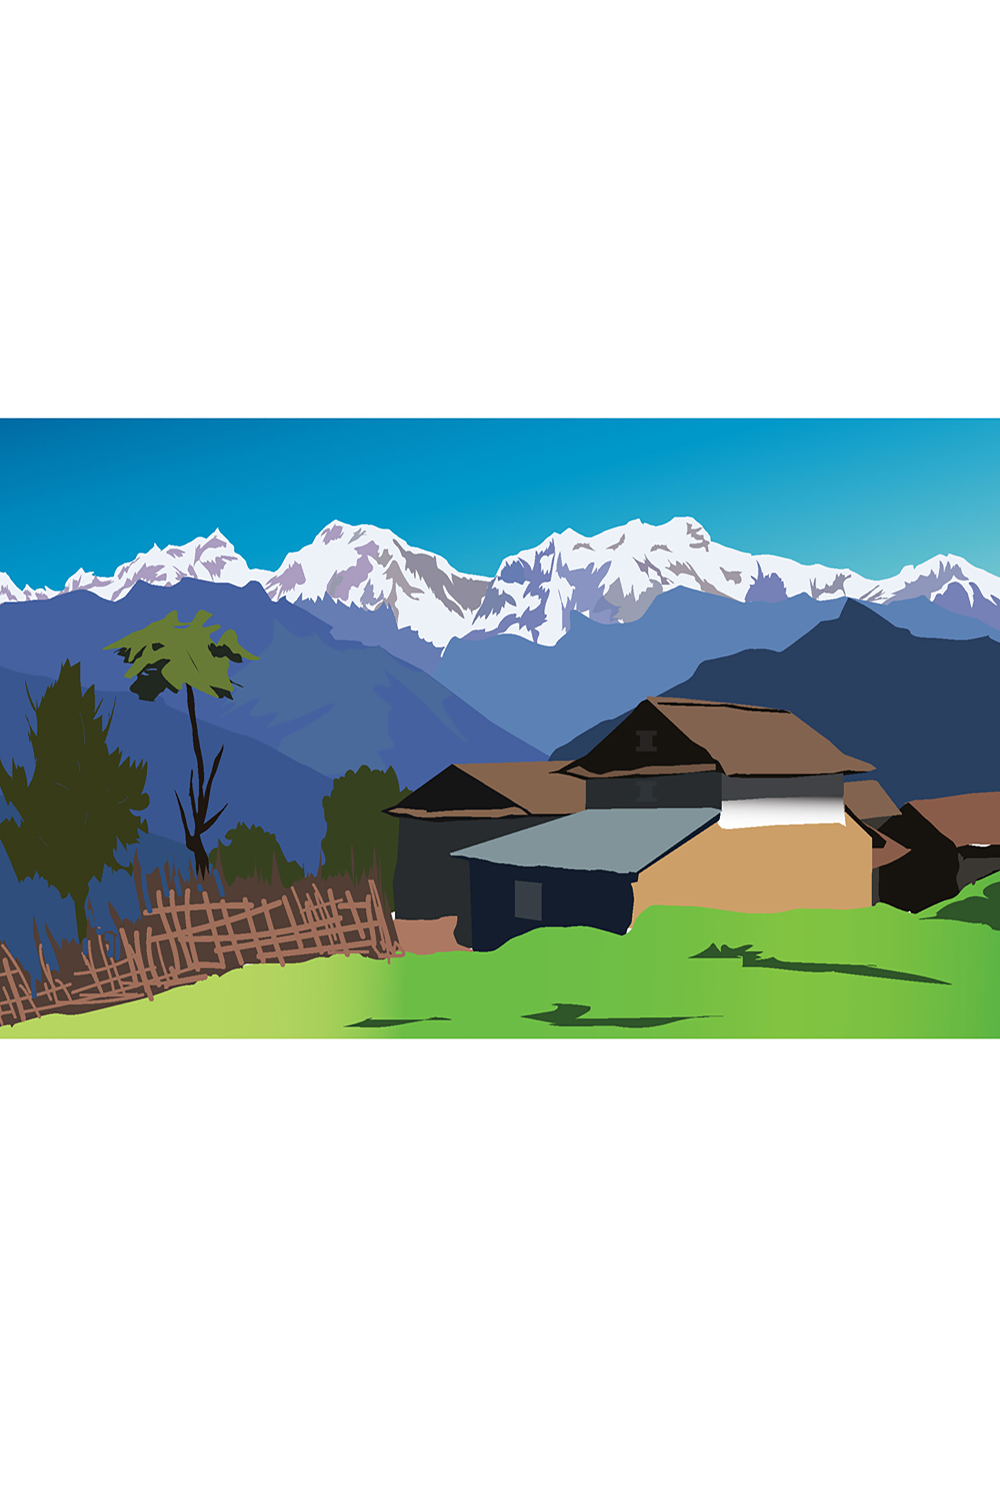 Nepali Village home pinterest preview image.